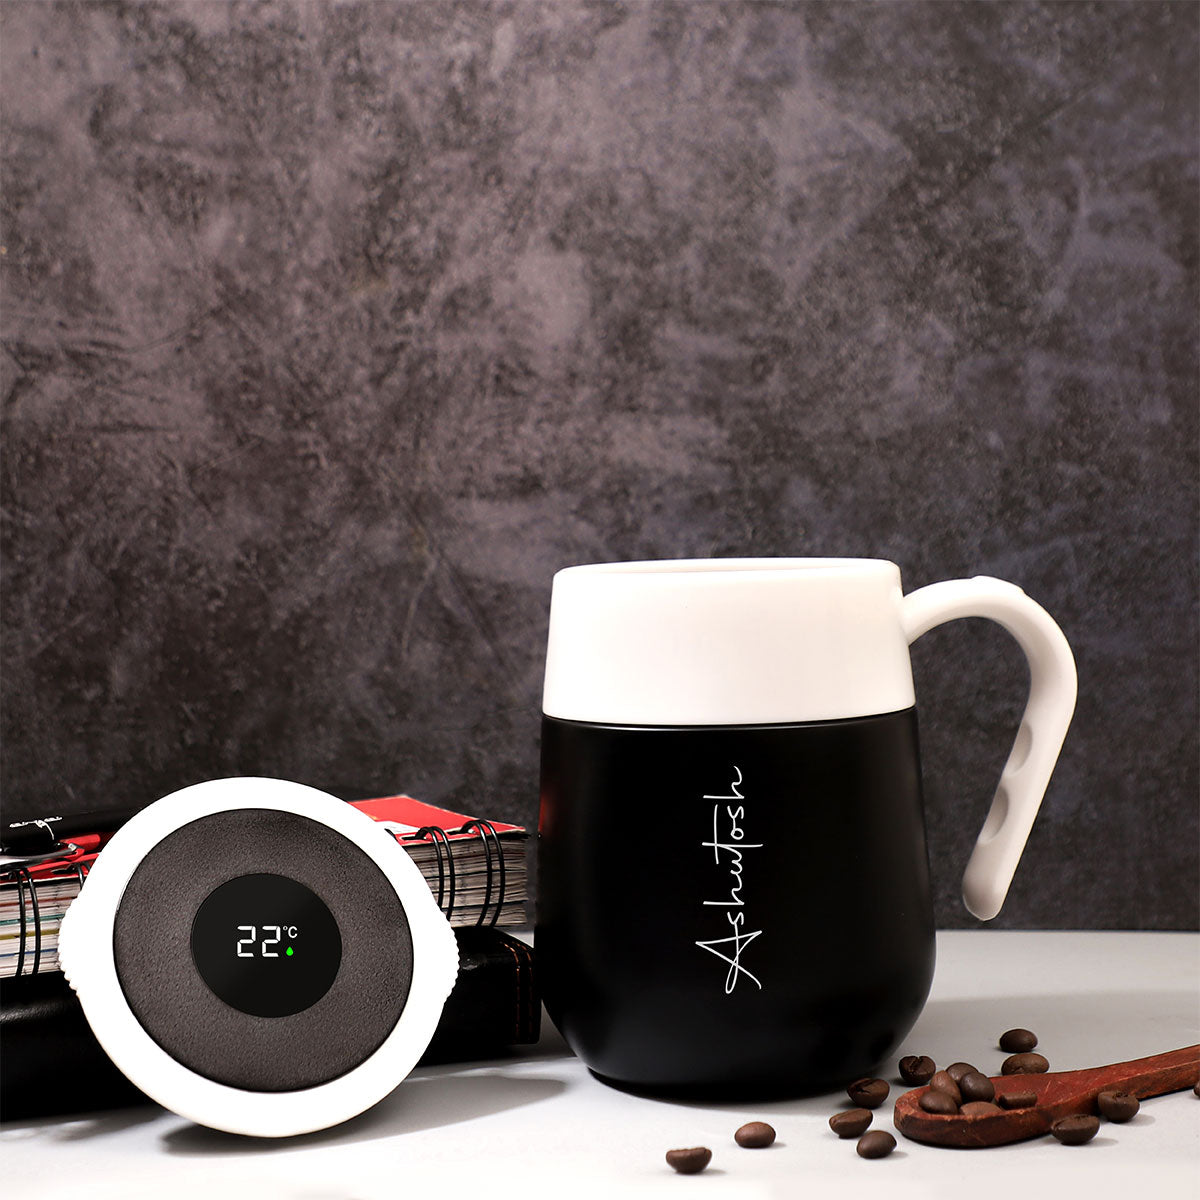 Temperature Coffee Mug With Smart LED Display